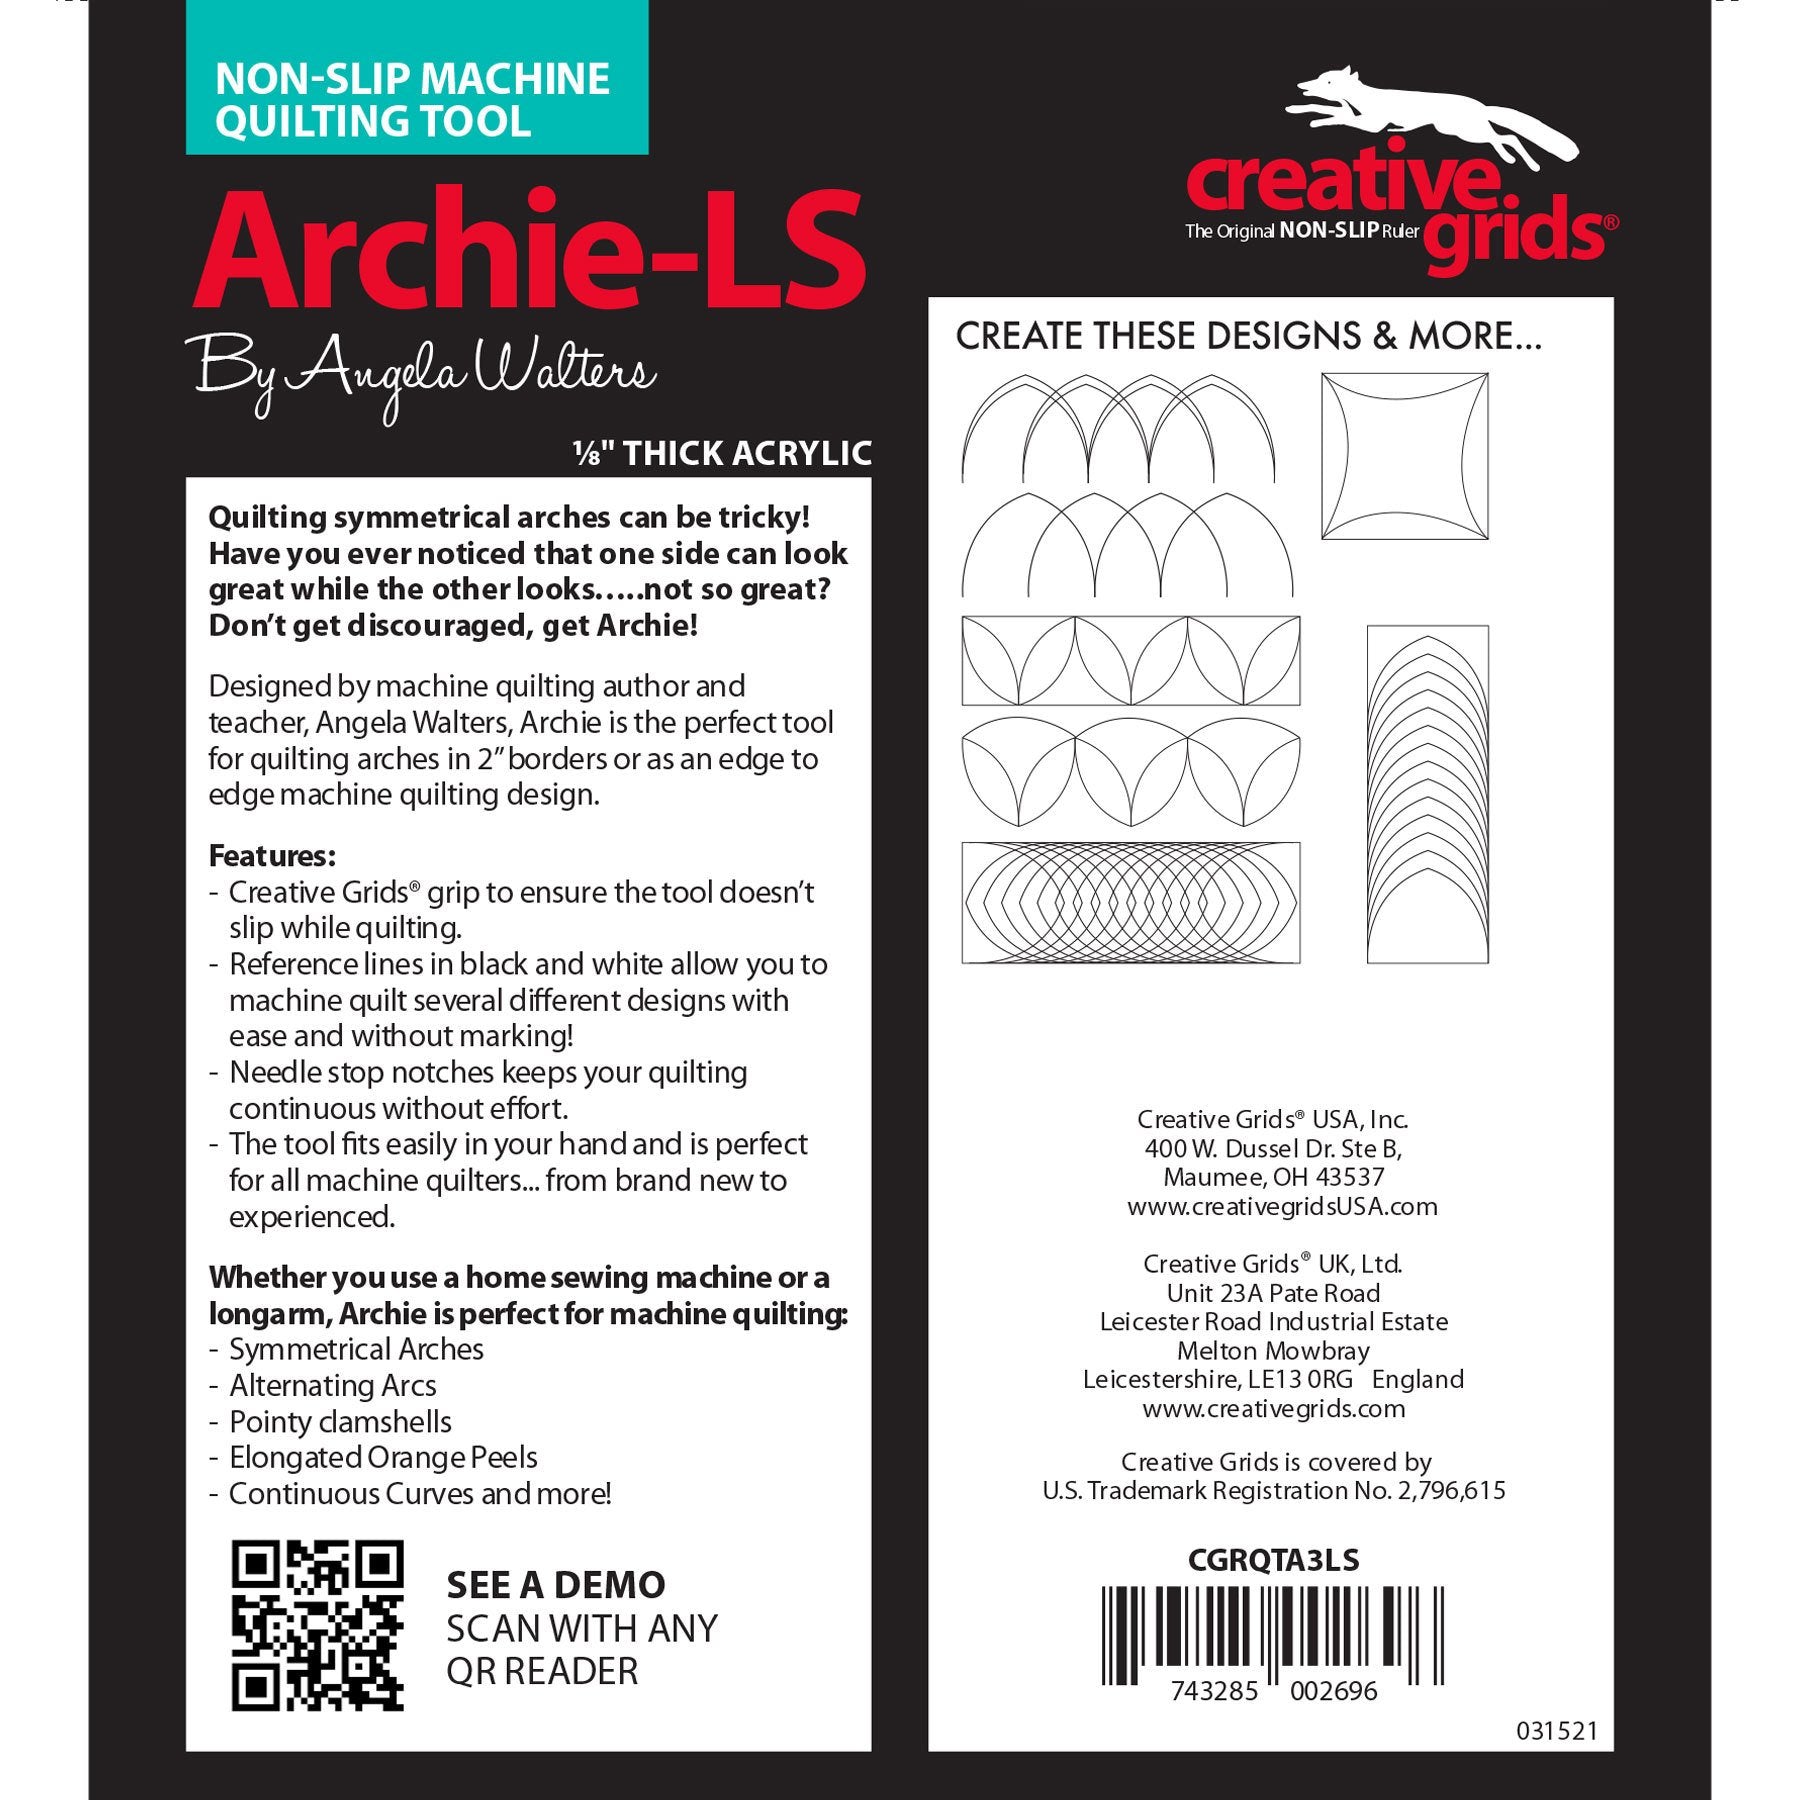 Creative Grids Low Shank Machine Archie Machine Quilting Tool CGRQTA3LS for Sale at World Weidner